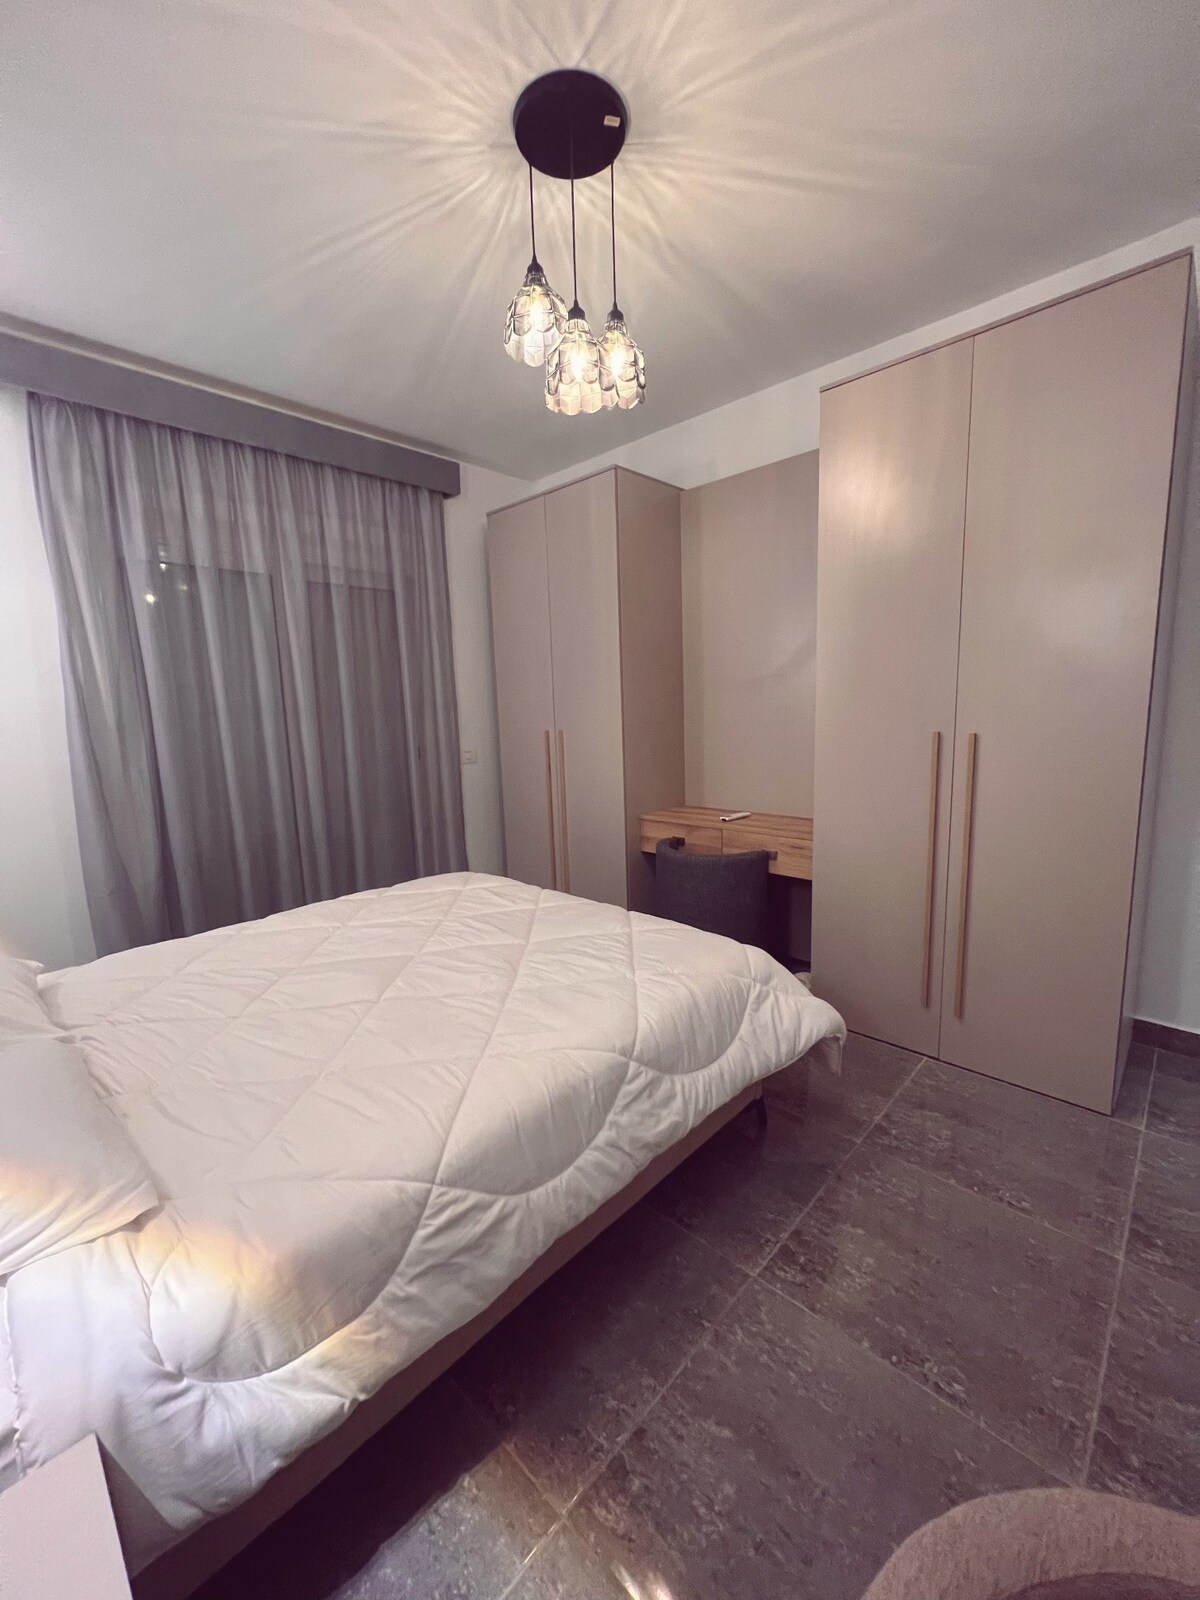 Modern simple 2-bedroom luxurious apartment.